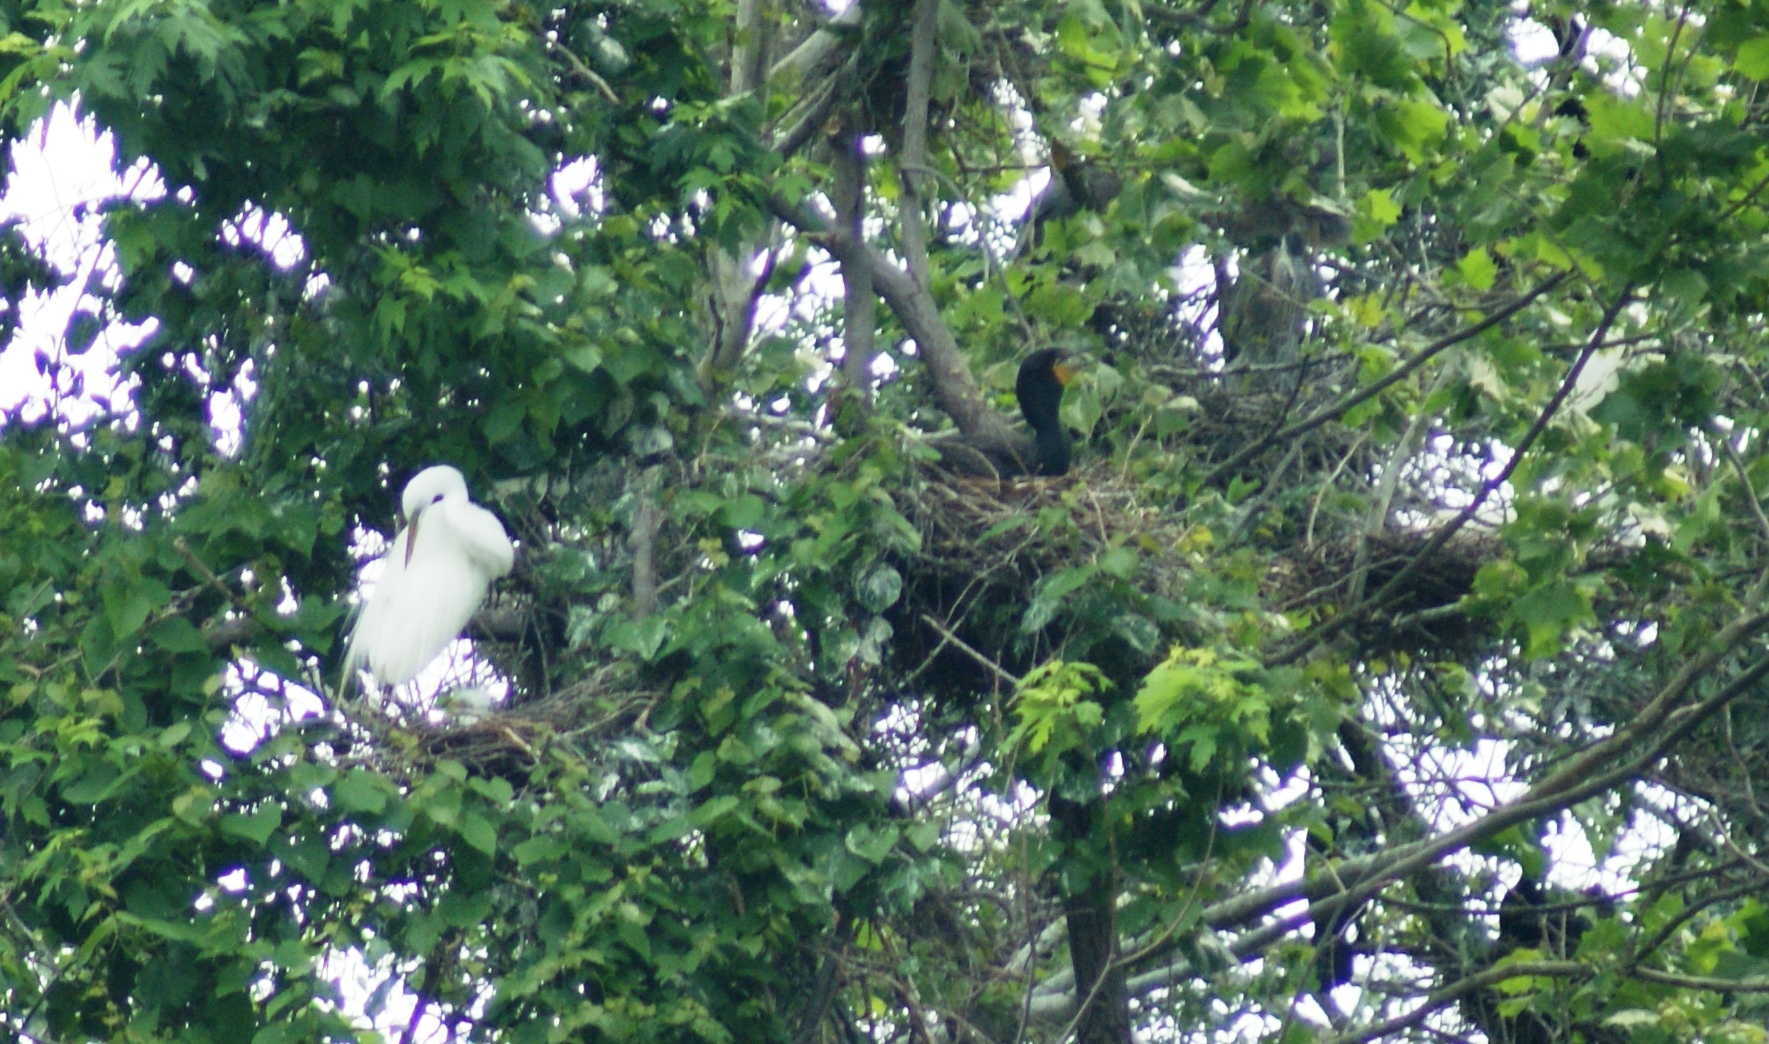 white egrets and cormorants nesting close